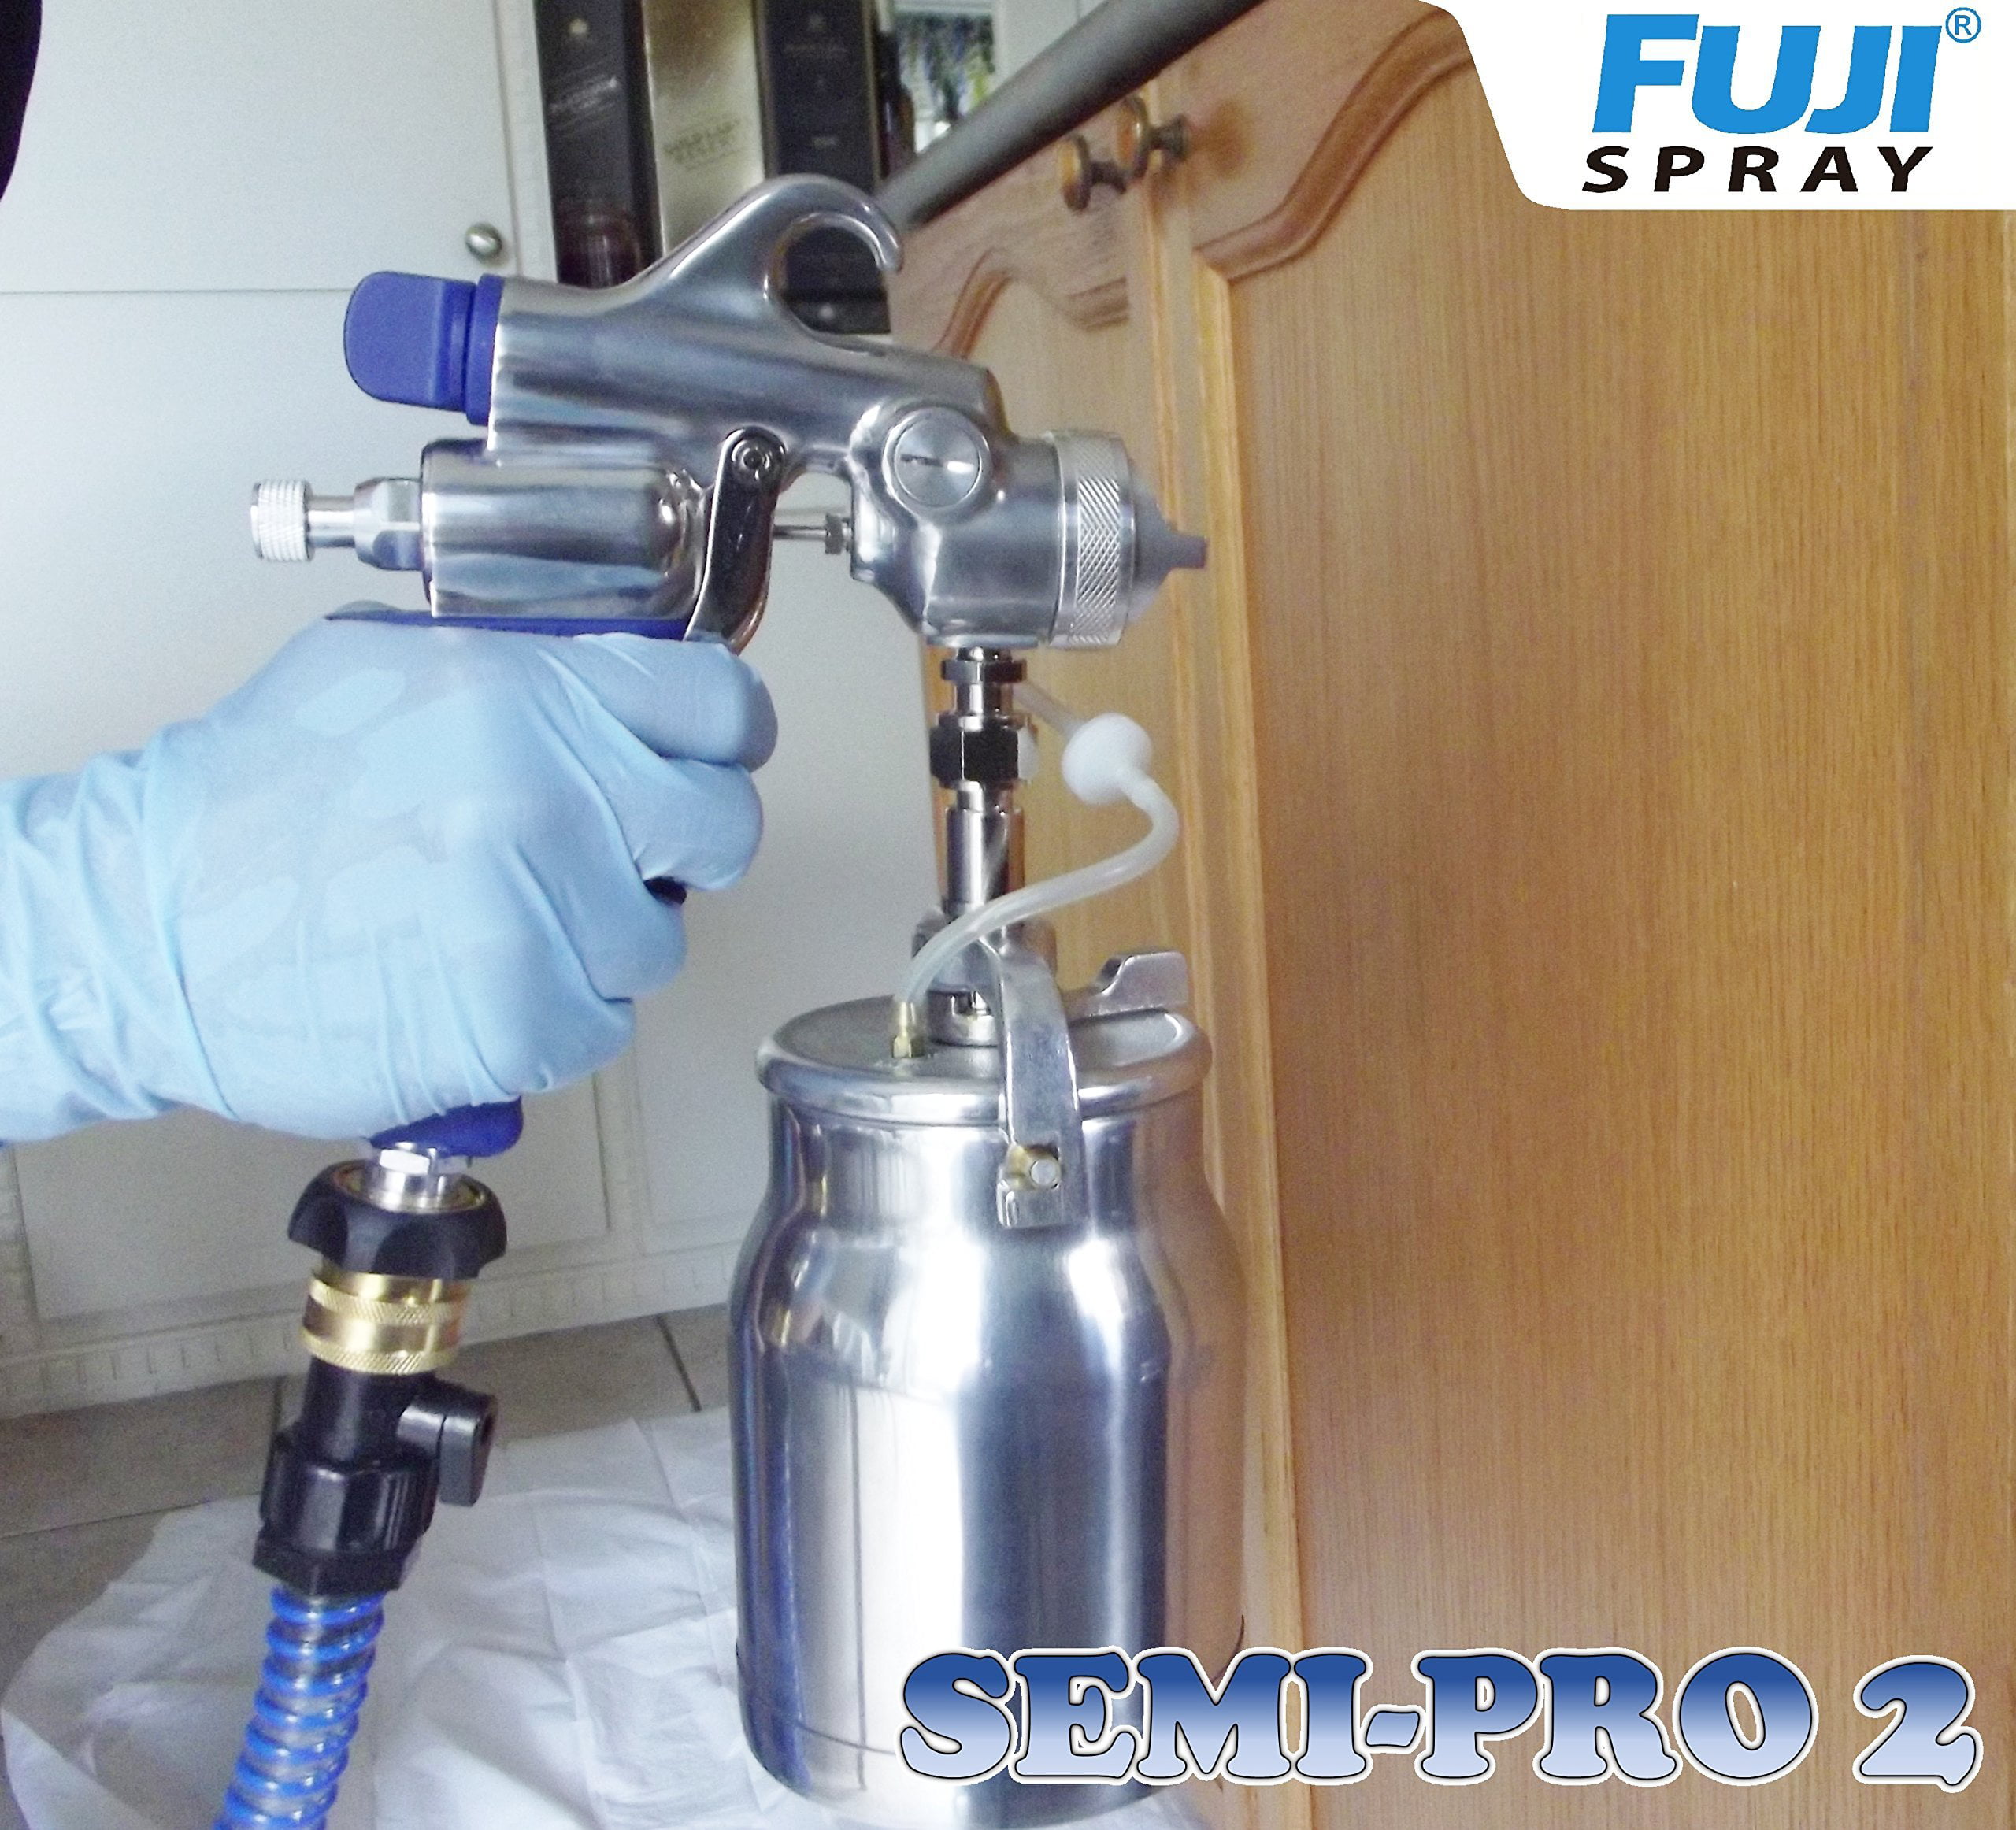 Fuji 2202 semi-pro 2 HVLP Spray système 